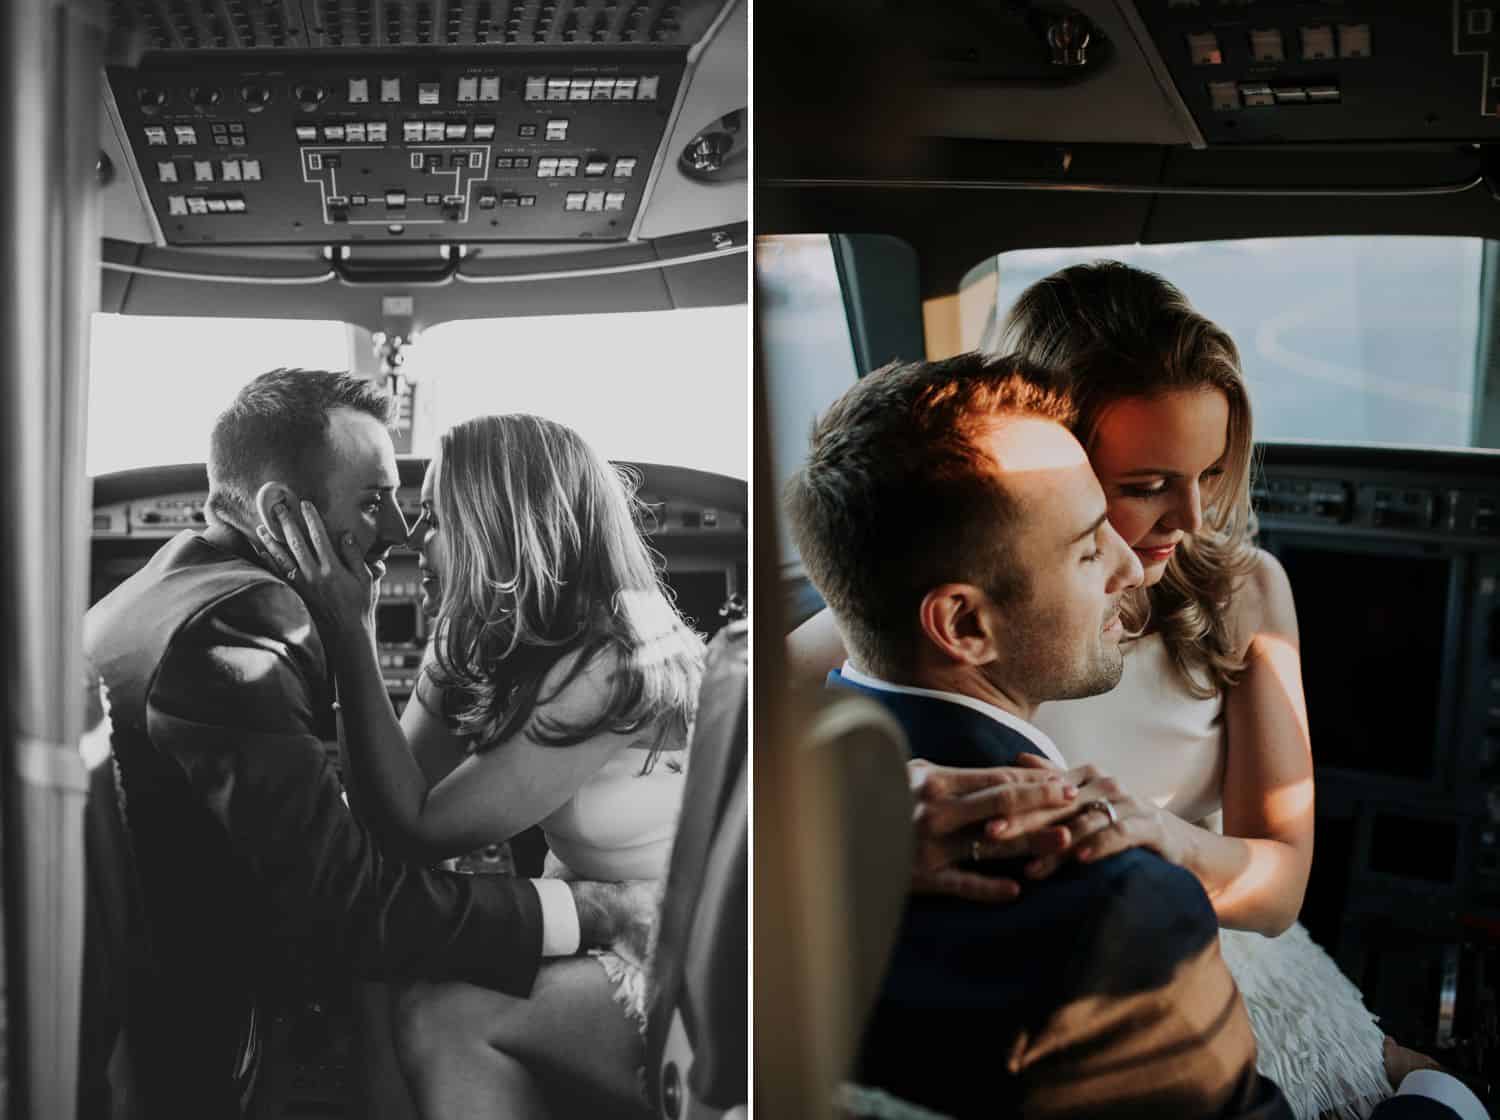 Photos of a couple taken inside an airplane